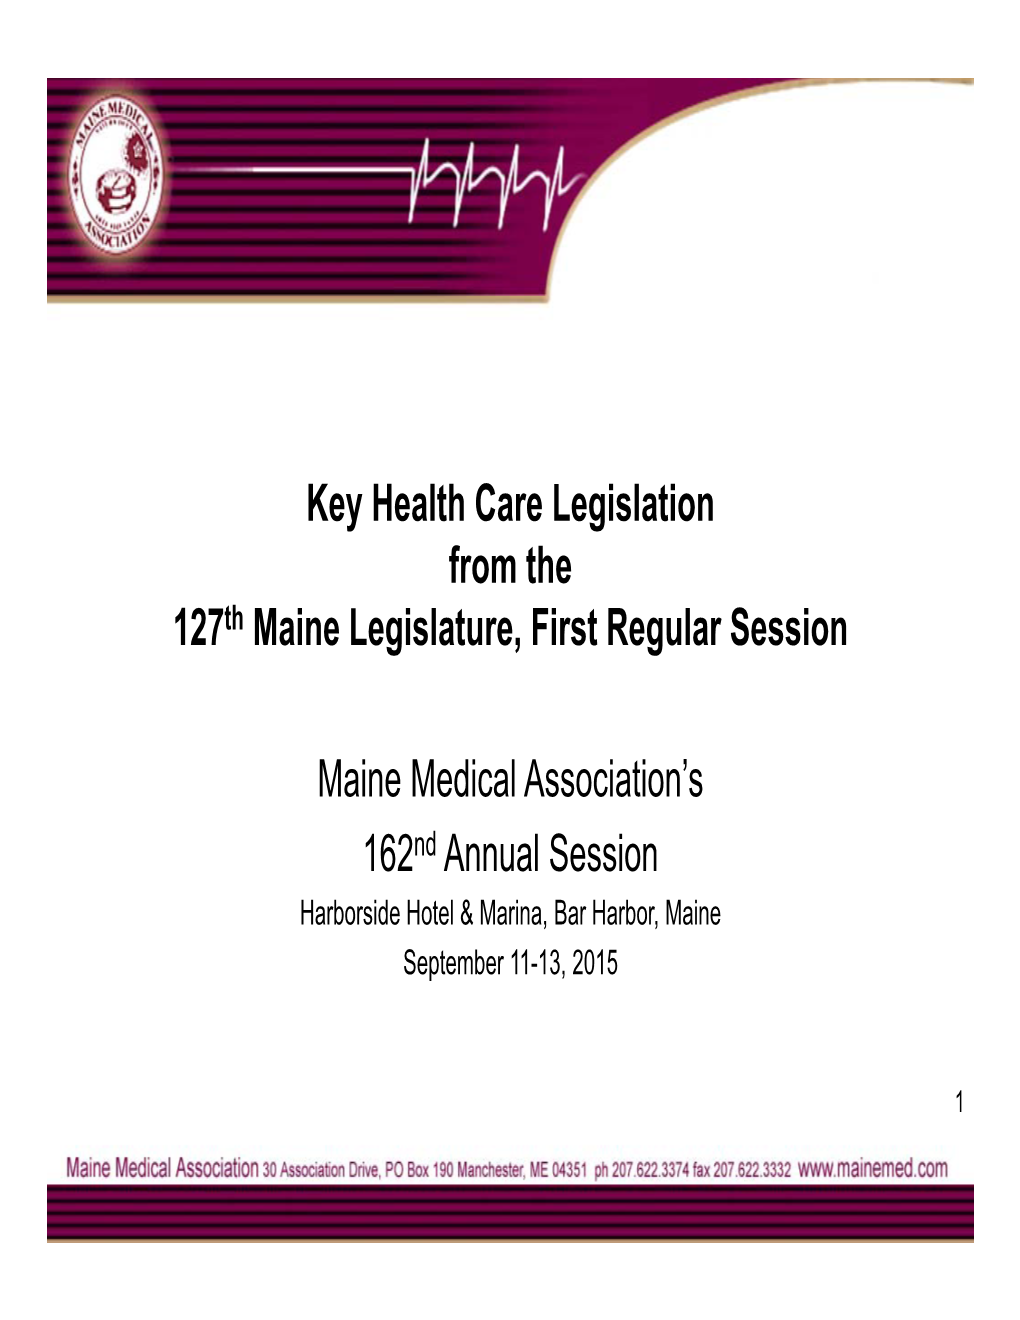 Key Health Care Legislation from the 127Th Maine Legislature, First Regular Session